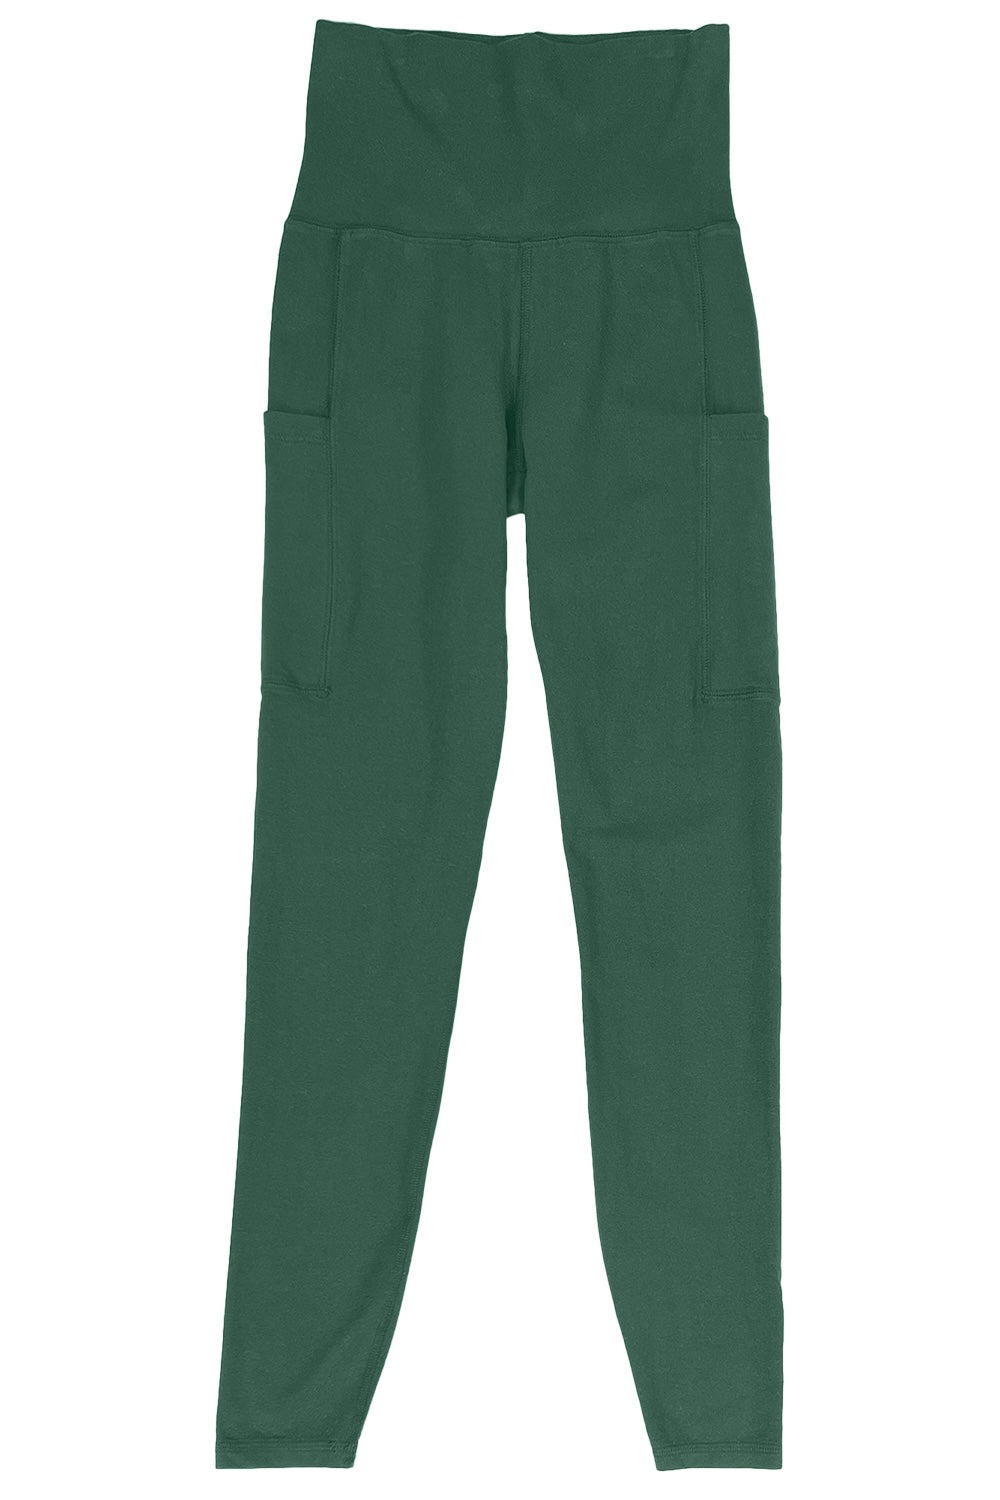 Orosi Pocket Leggings - Mid Rise | Jungmaven Hemp Clothing & Accessories / Color: Hunter Green